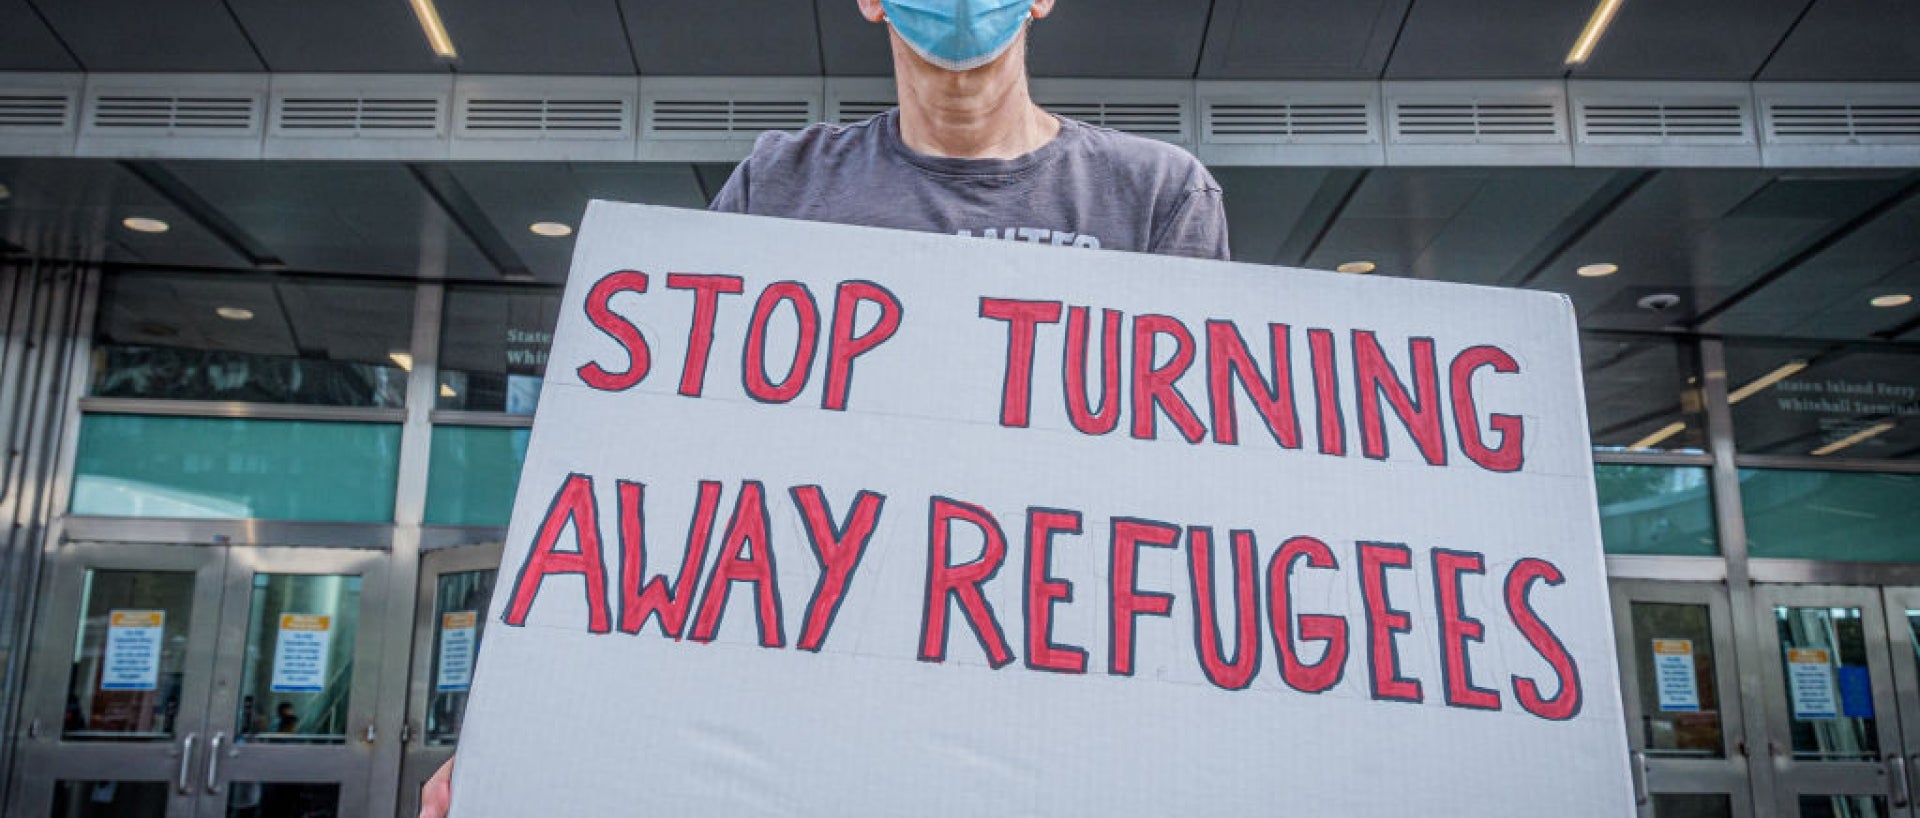 Masked man holding "stop turning away refugees" sign